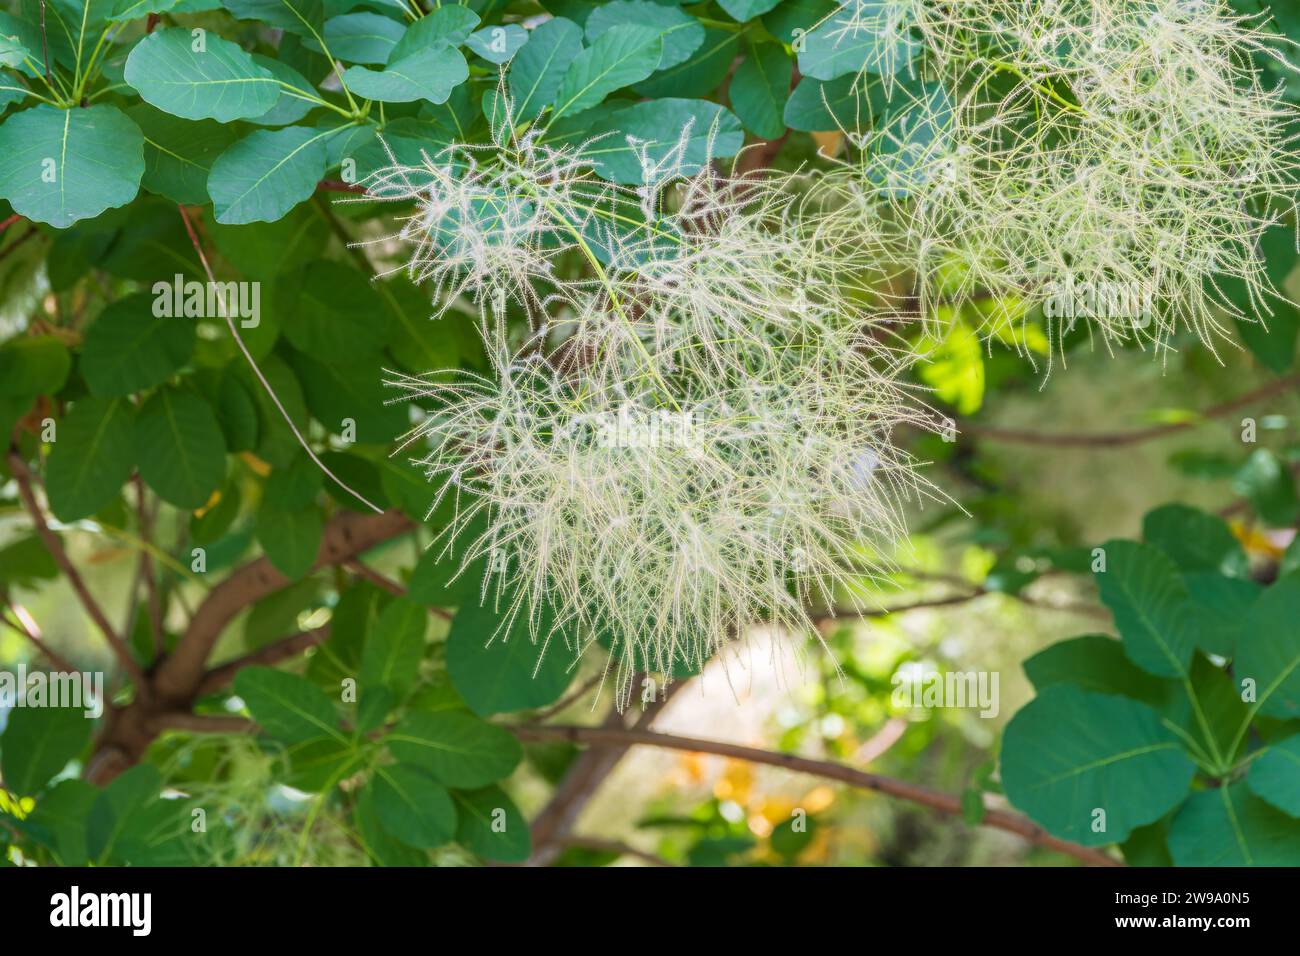 Interessante Pflanze Cotinus coggygria, Rhus cotinus, Rauchbaum, Rauchbusch, venezianischer Sumach. Familie Cotinus coggygria 'Young Lady' Anacardiaceae. Stockfoto